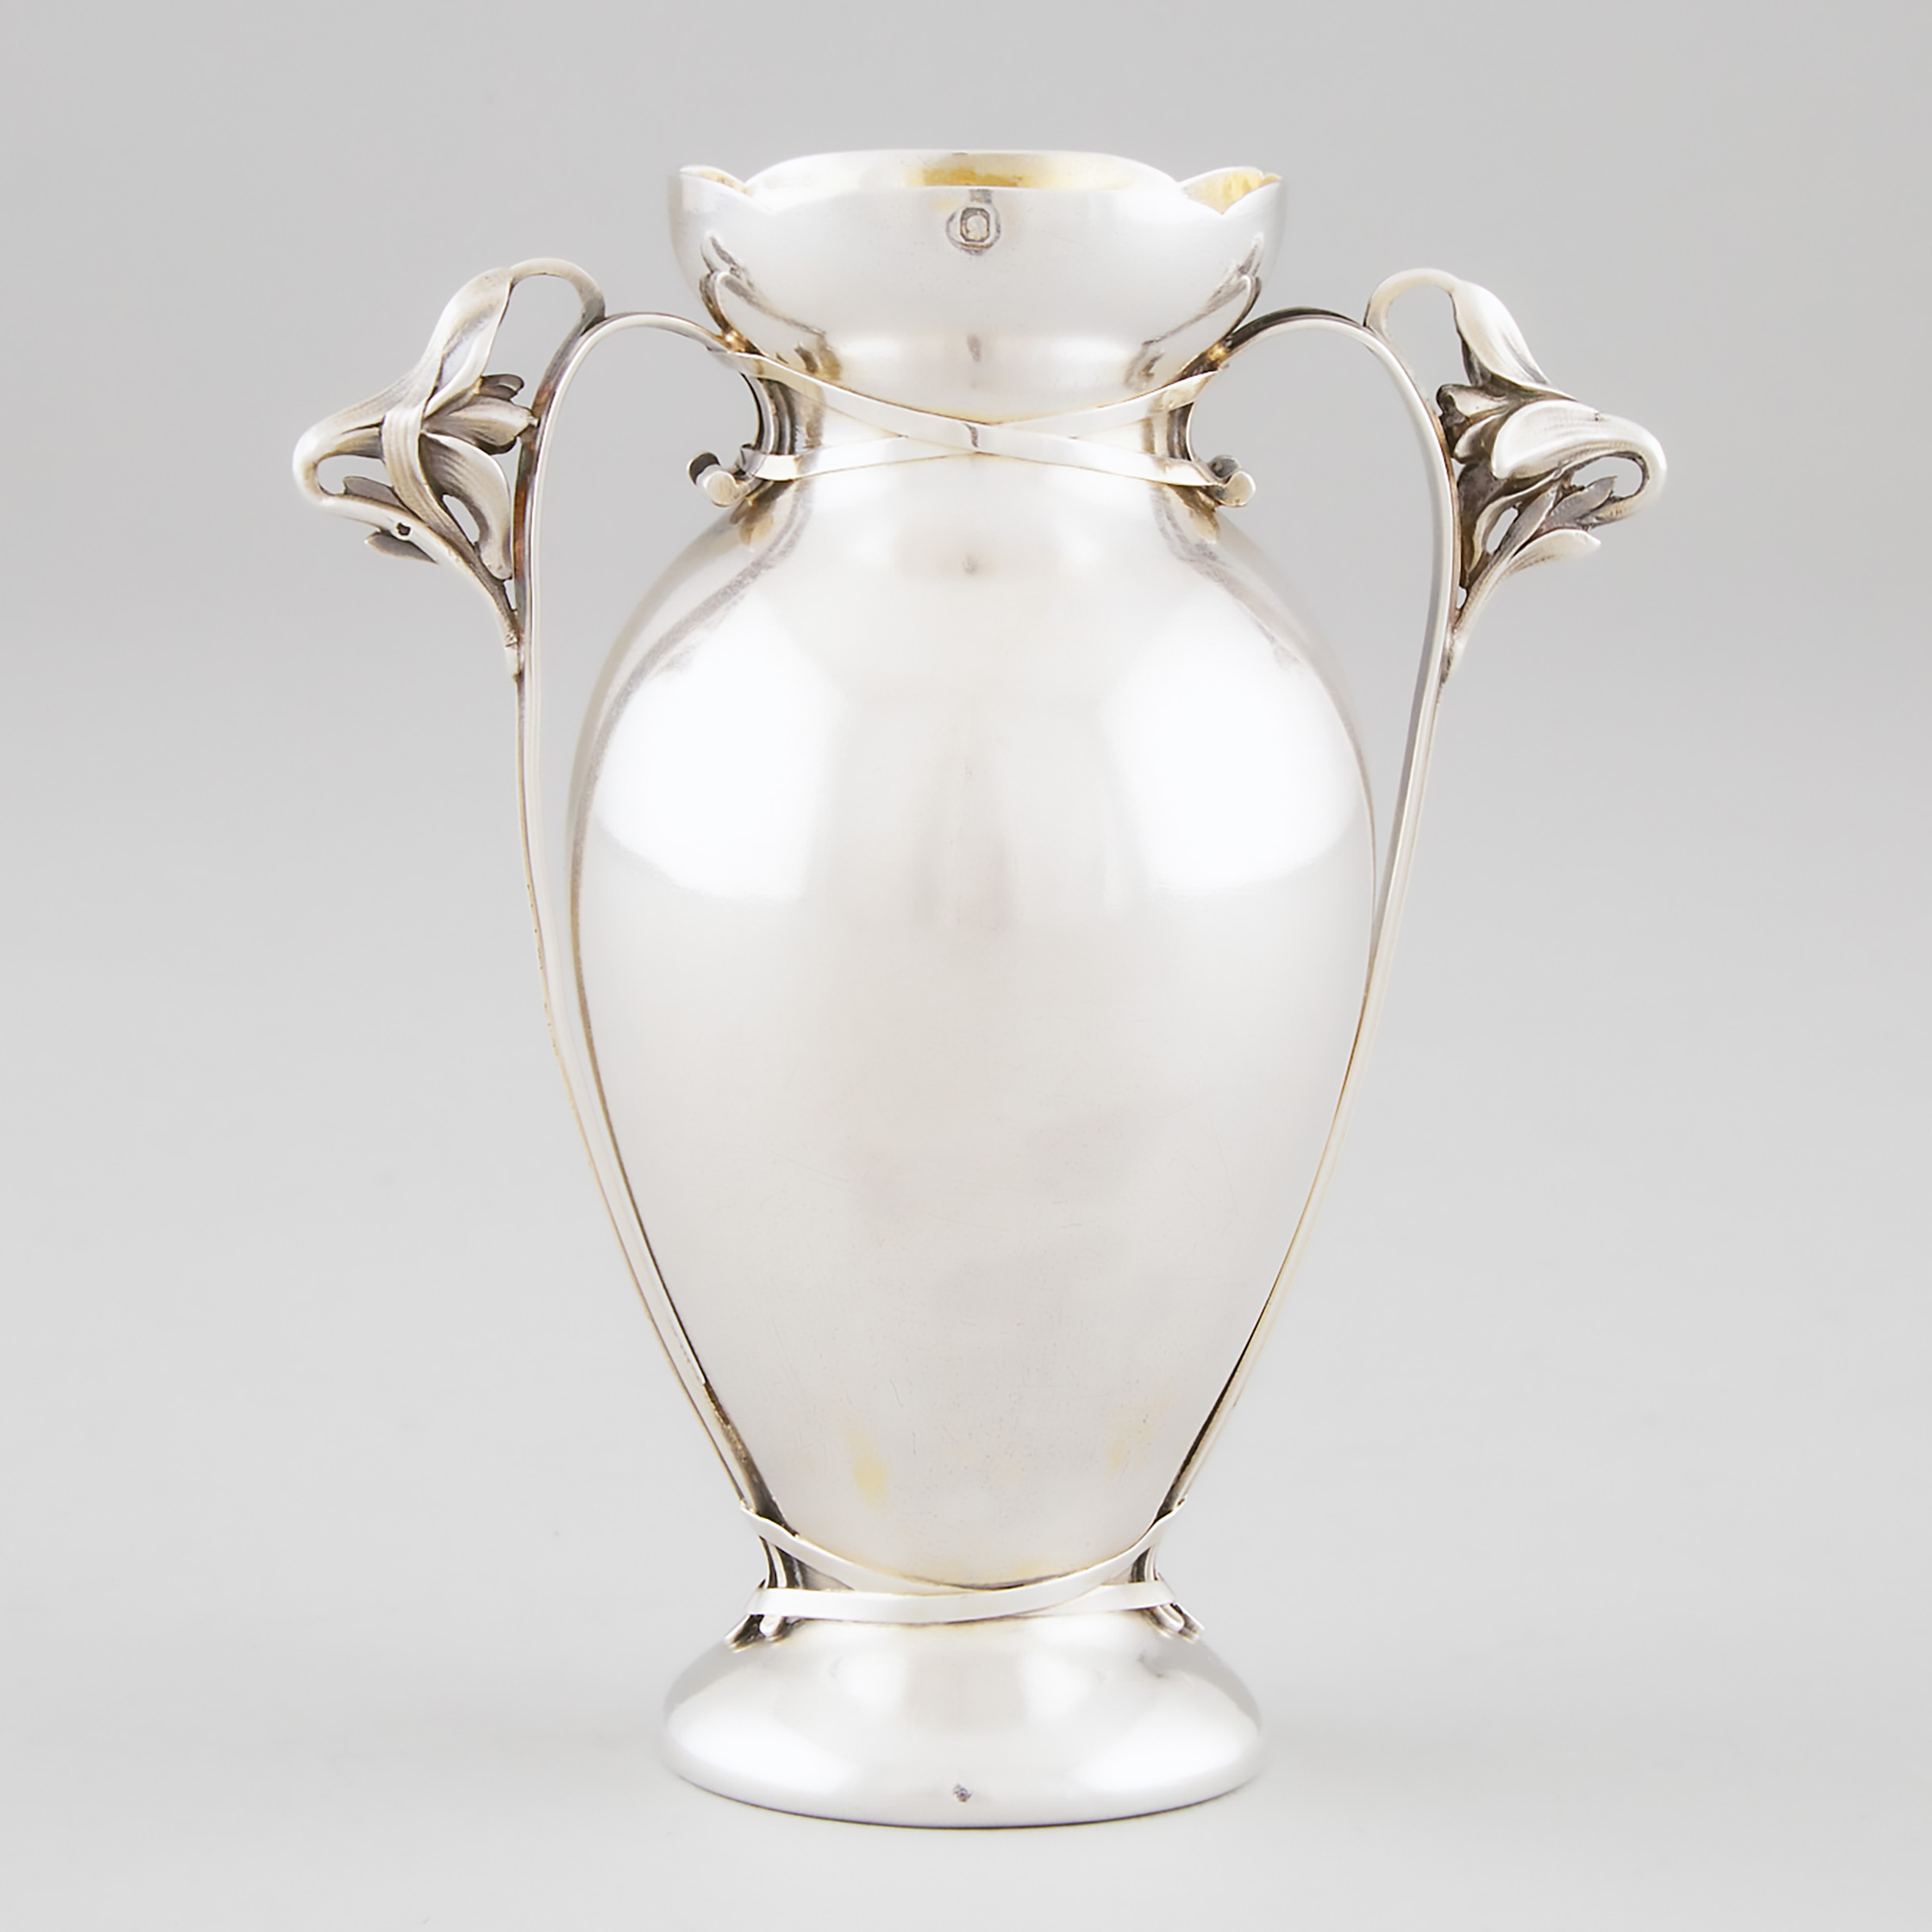 French Art Nouveau Silver Small Vase, Charles Forgelot, Paris, c.1900